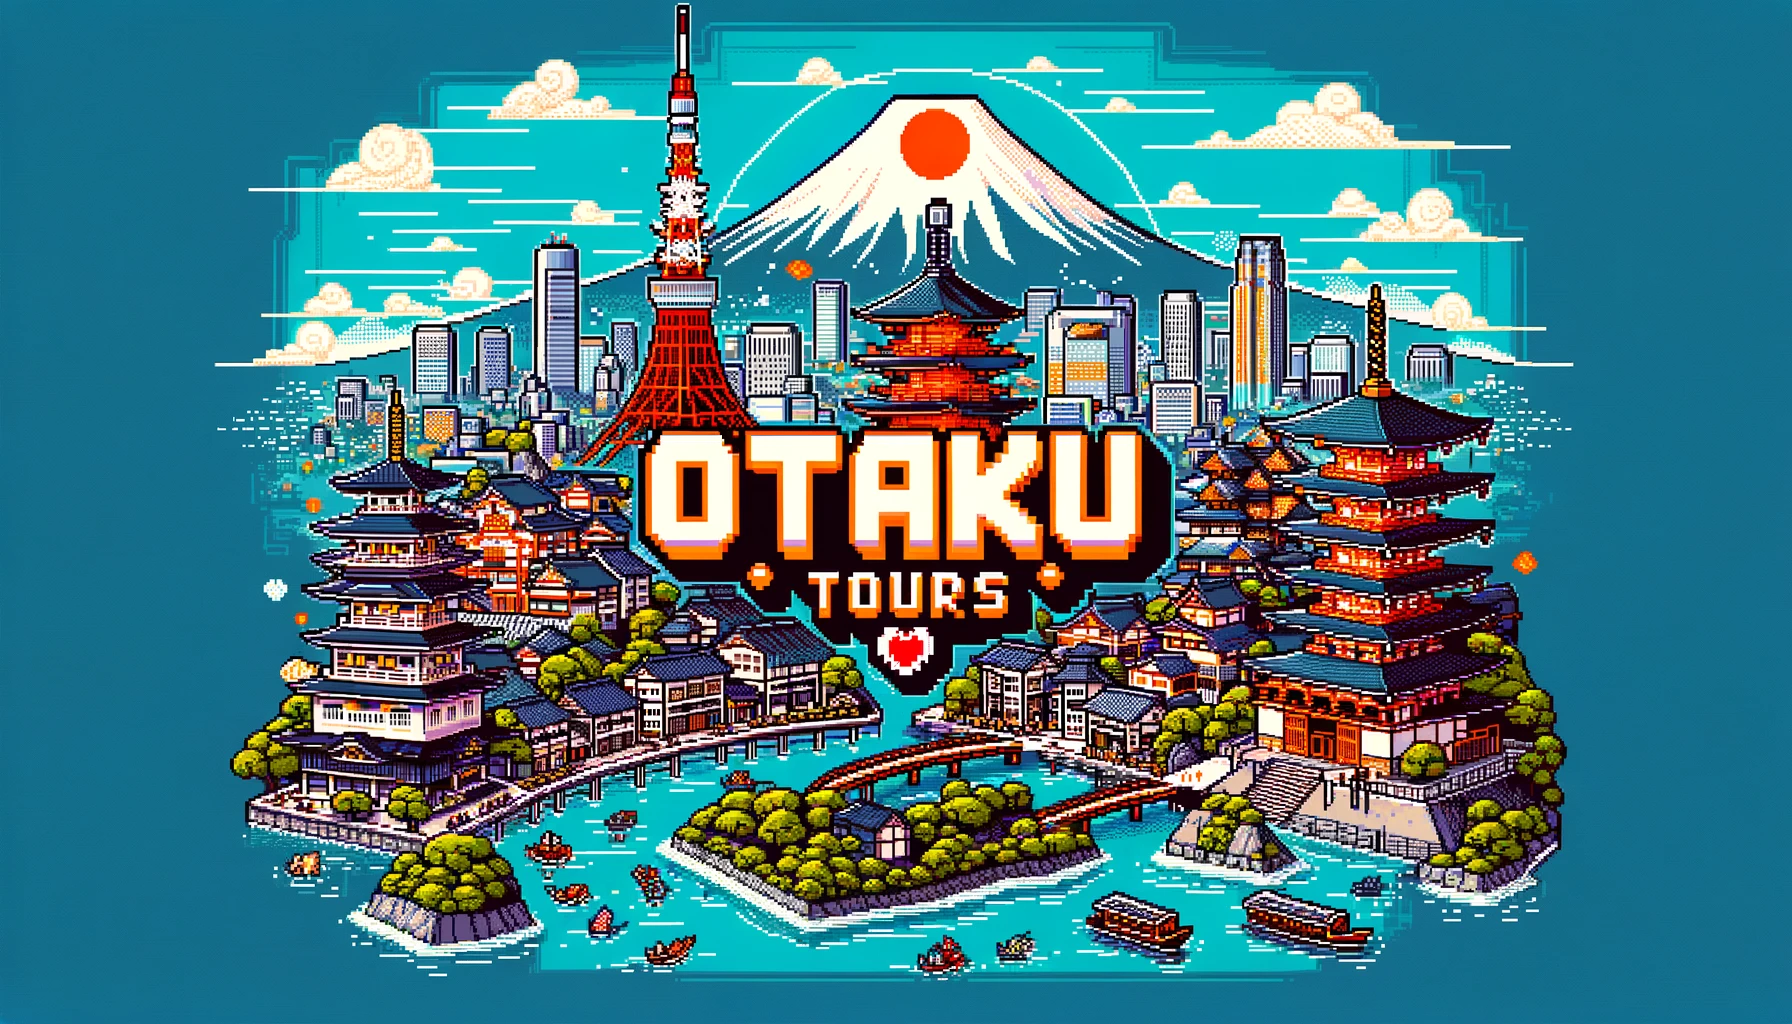 Otaku Tours is coming.